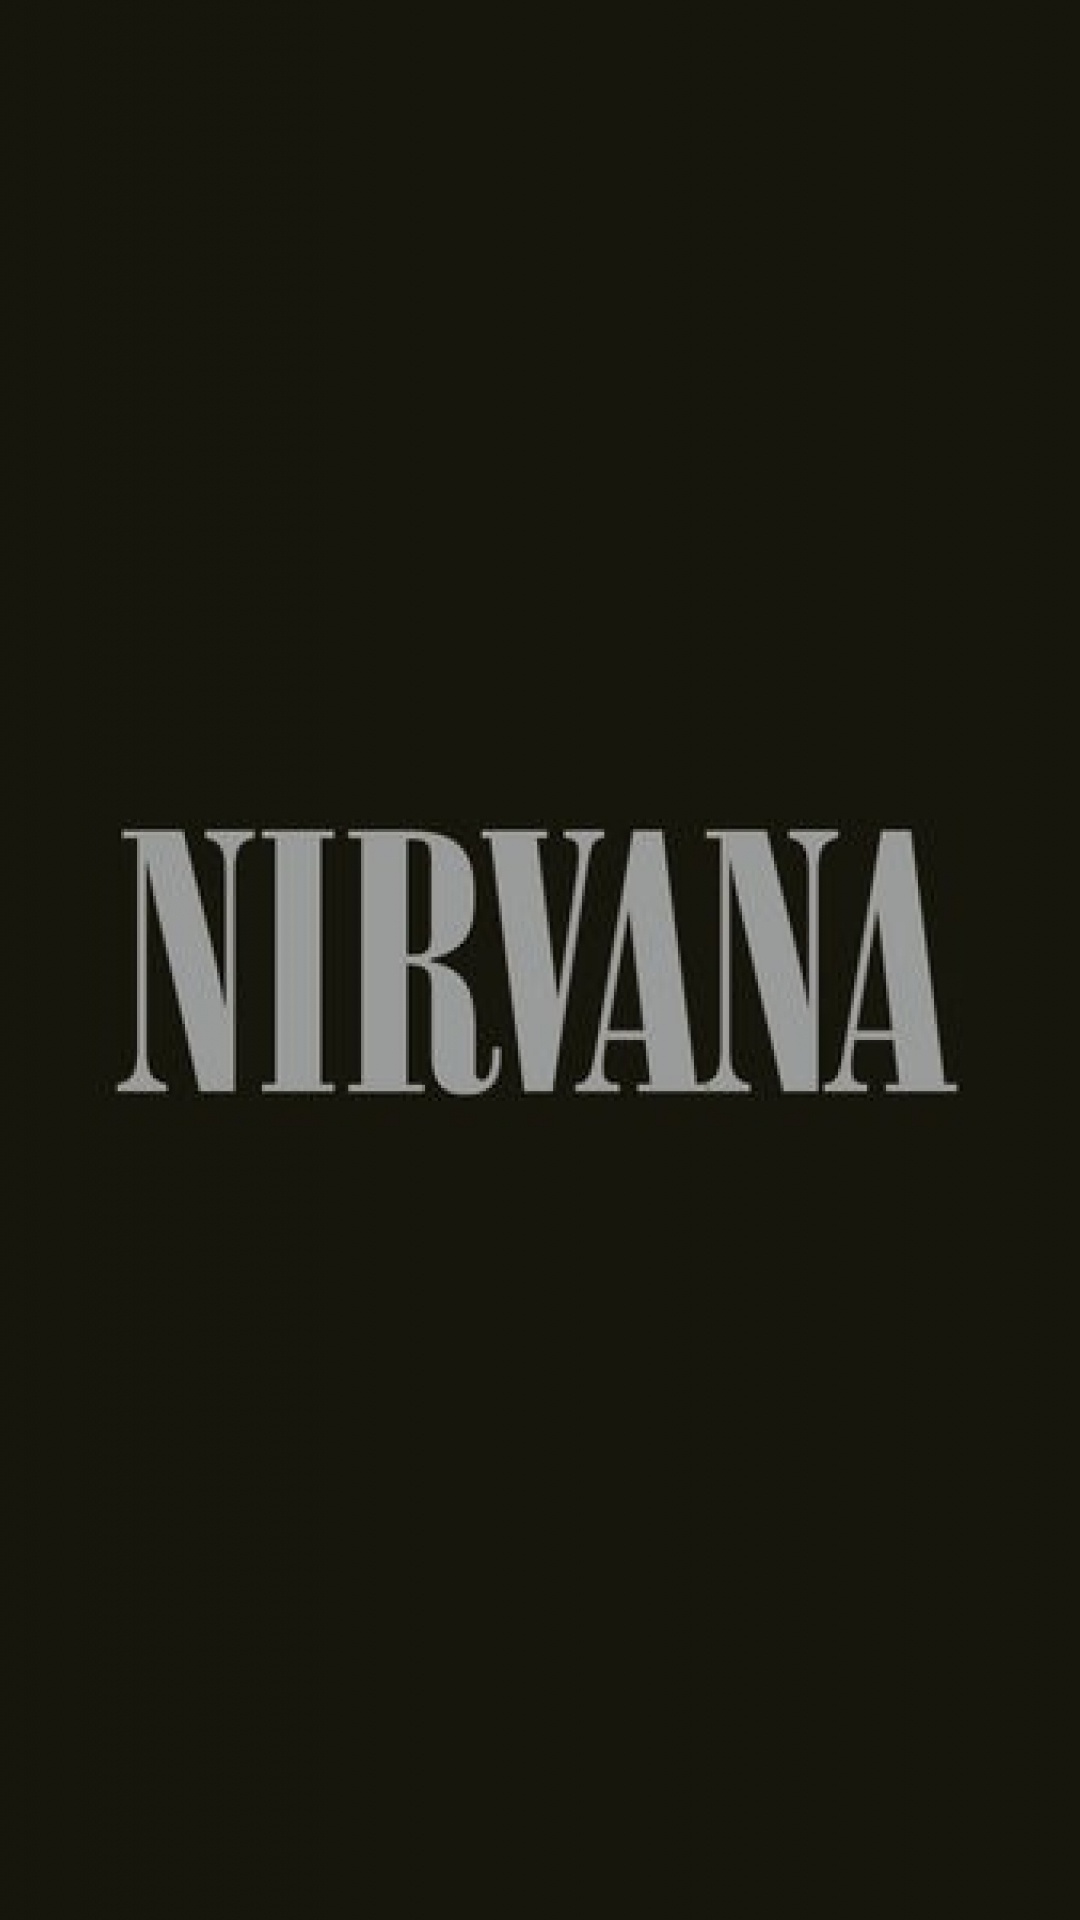 Nirvana, Album, Graphisme, Texte, Noir. Wallpaper in 1080x1920 Resolution